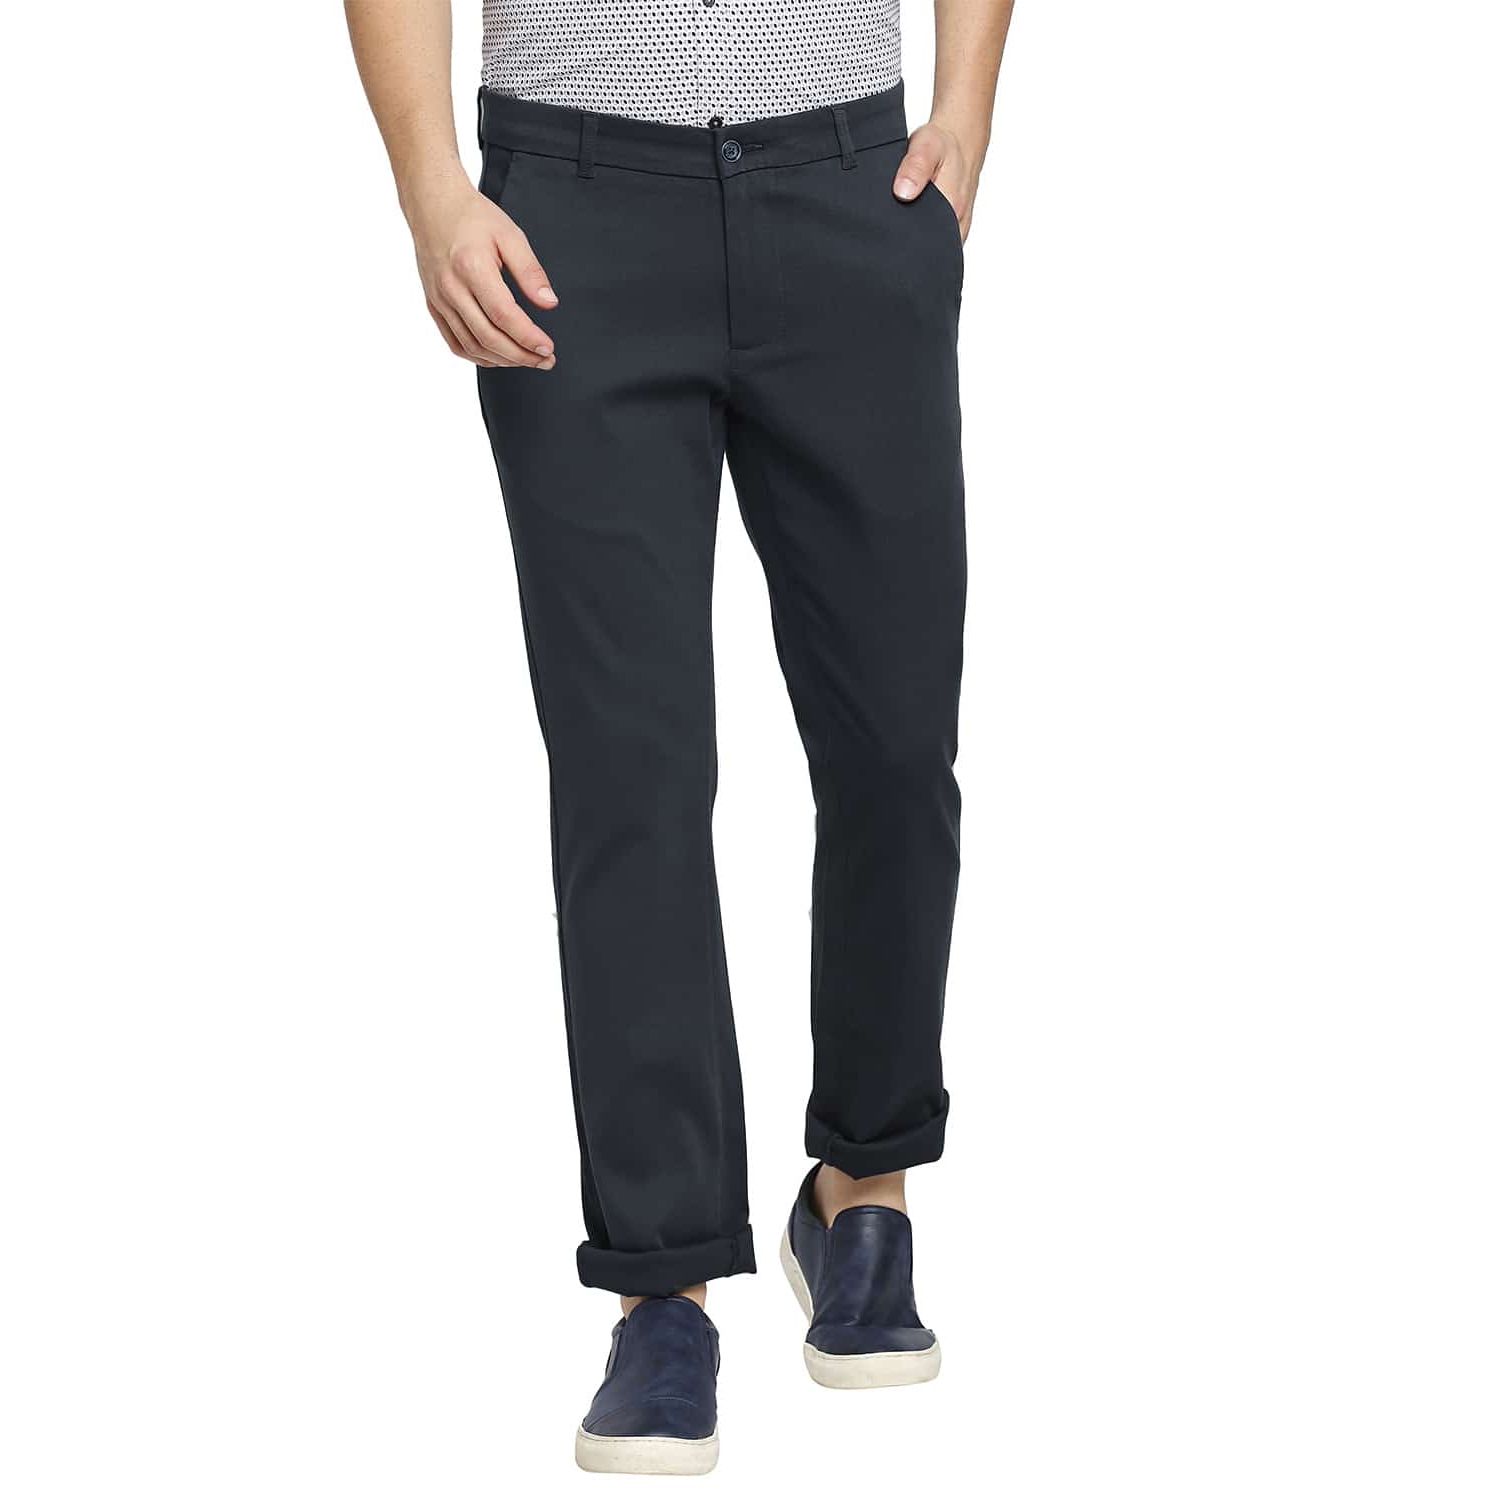 Basics | Men's Navy Cotton Blend Solid Trouser 0